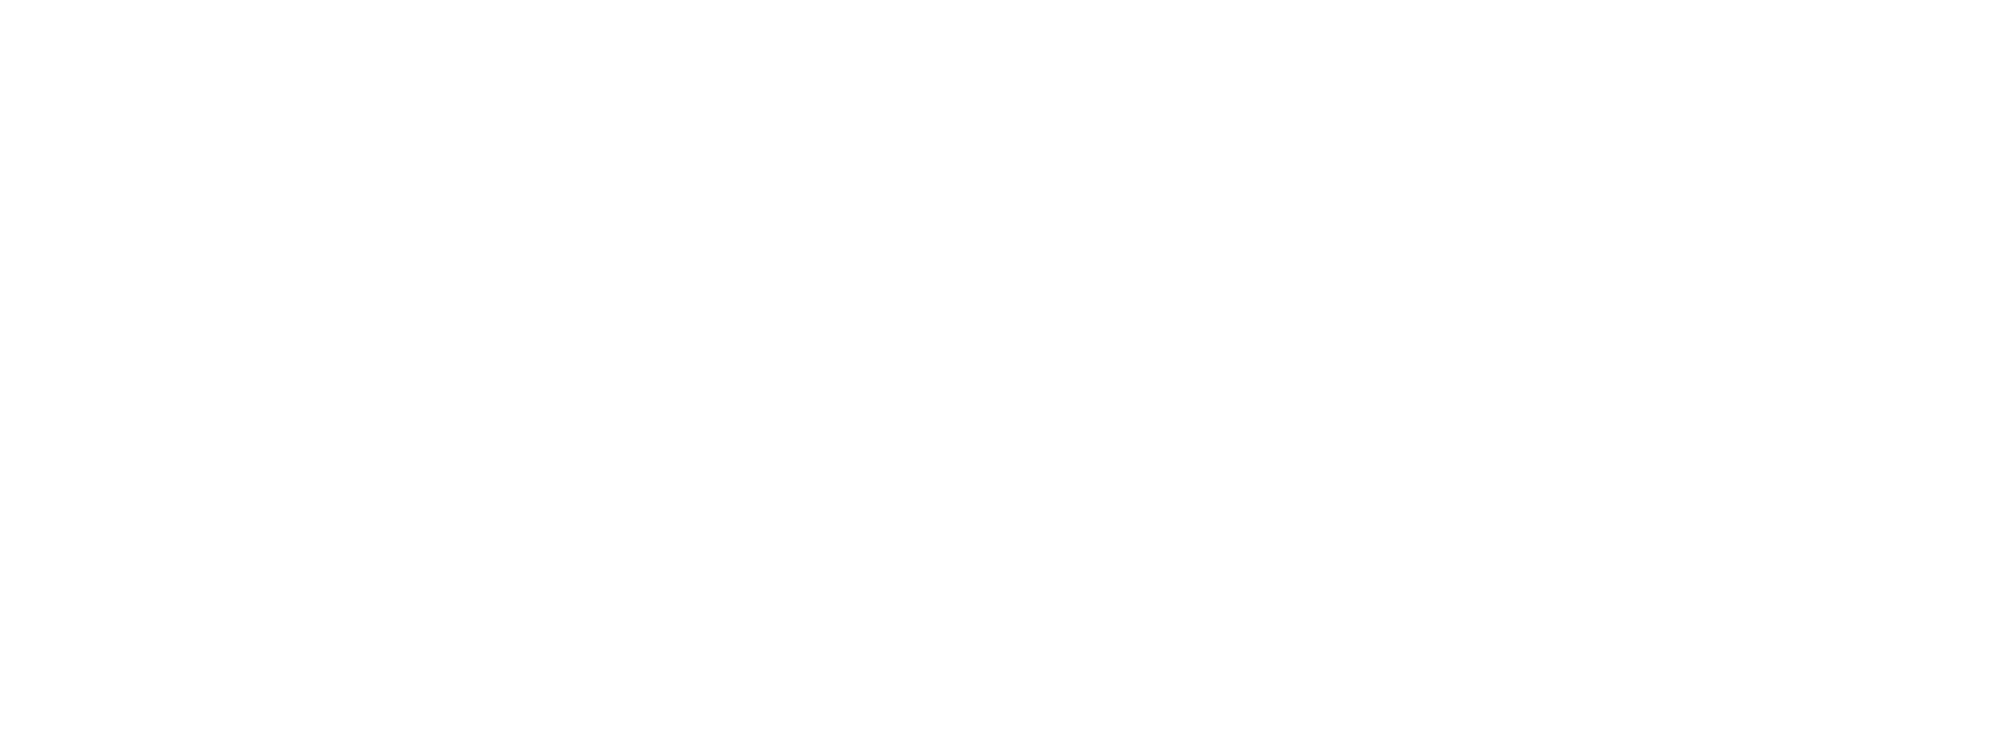 Urban Outreach Foundation